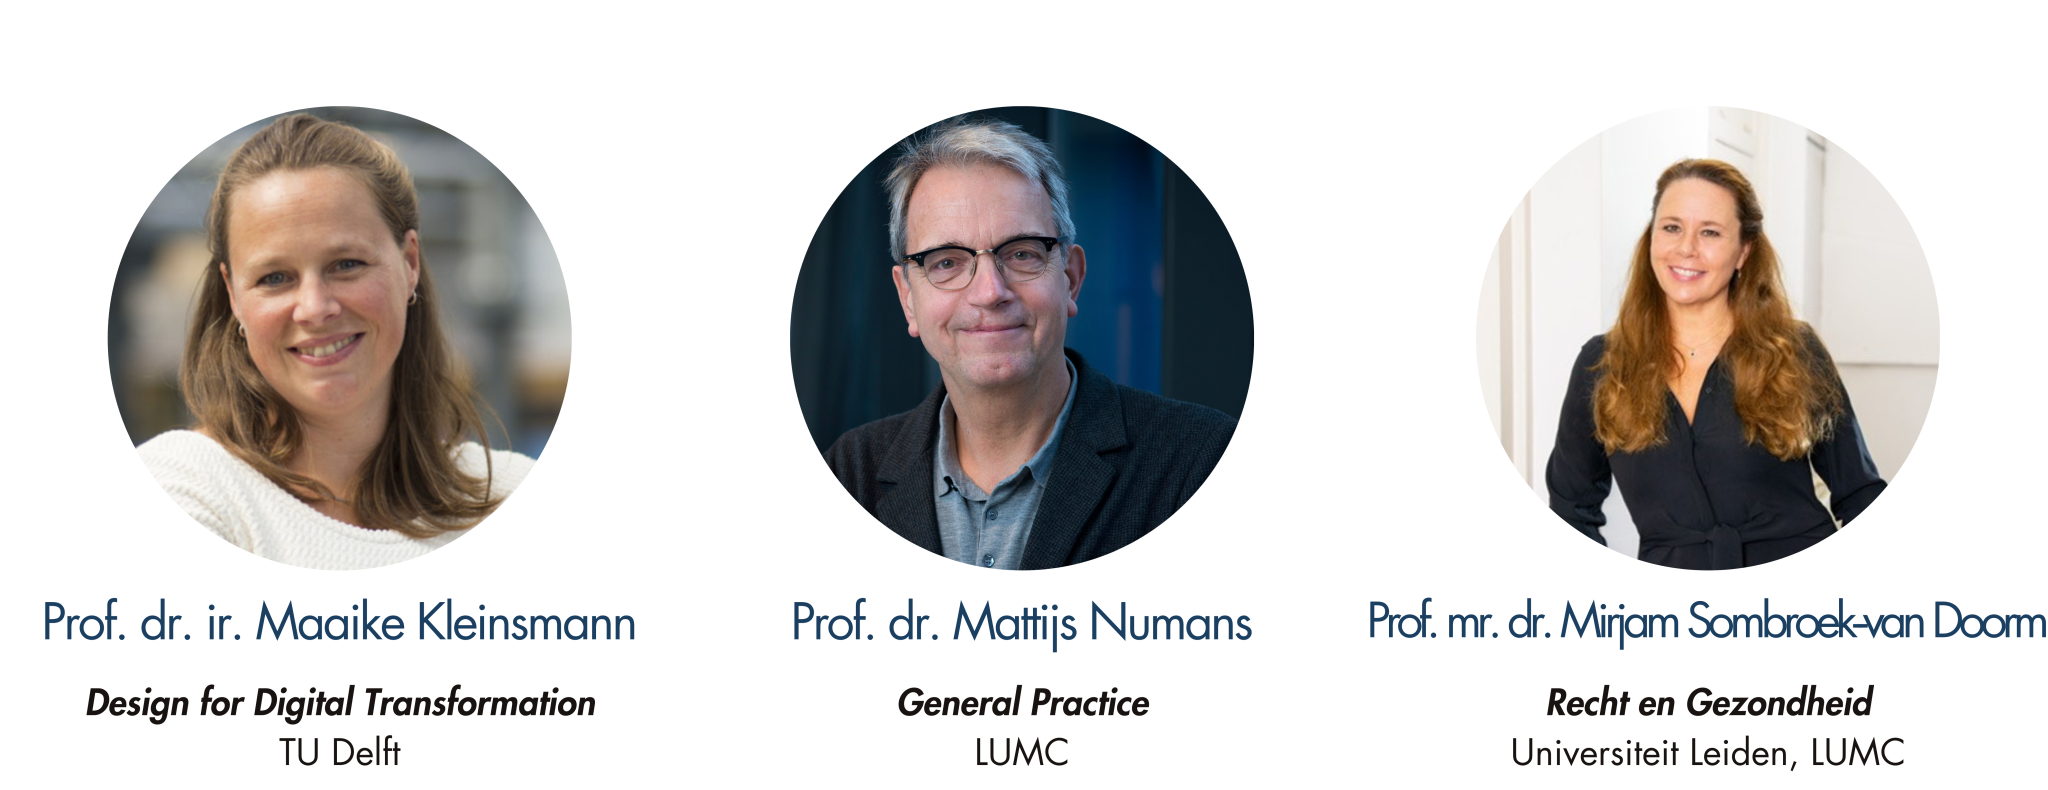 Prof. dr. Mattijs Numans, Prof. dr. ir. Maaike Kleinsmann, Prof. mr. dr. Mirjam Sombroek-van Doorm